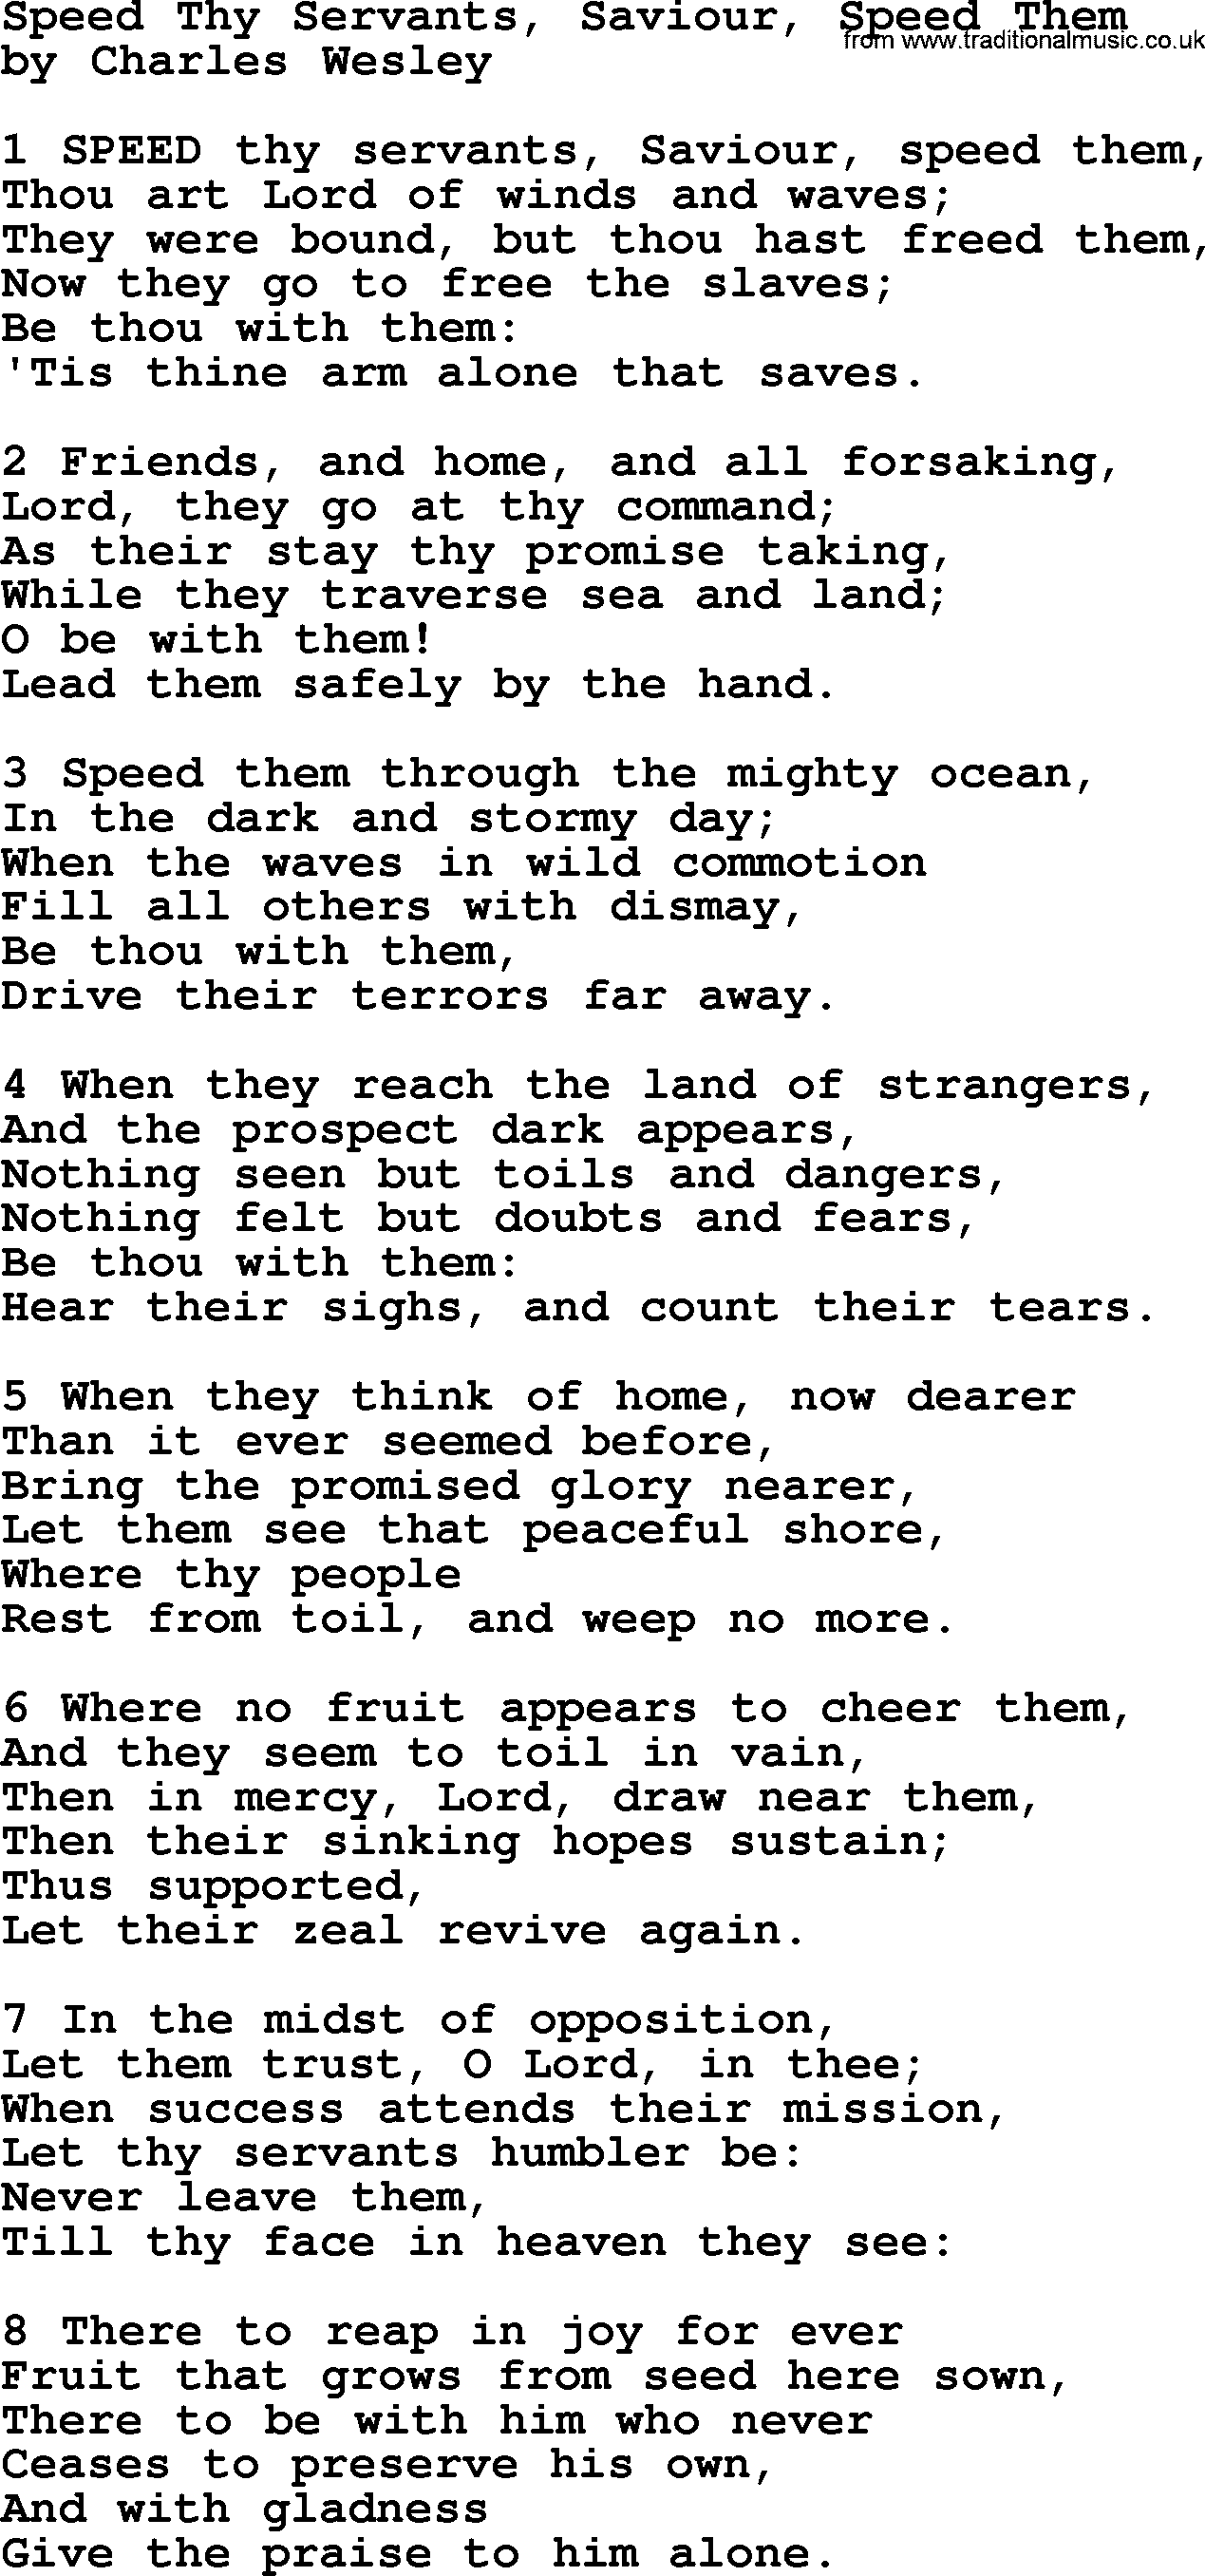 Charles Wesley hymn: Speed Thy Servants, Saviour, Speed Them, lyrics